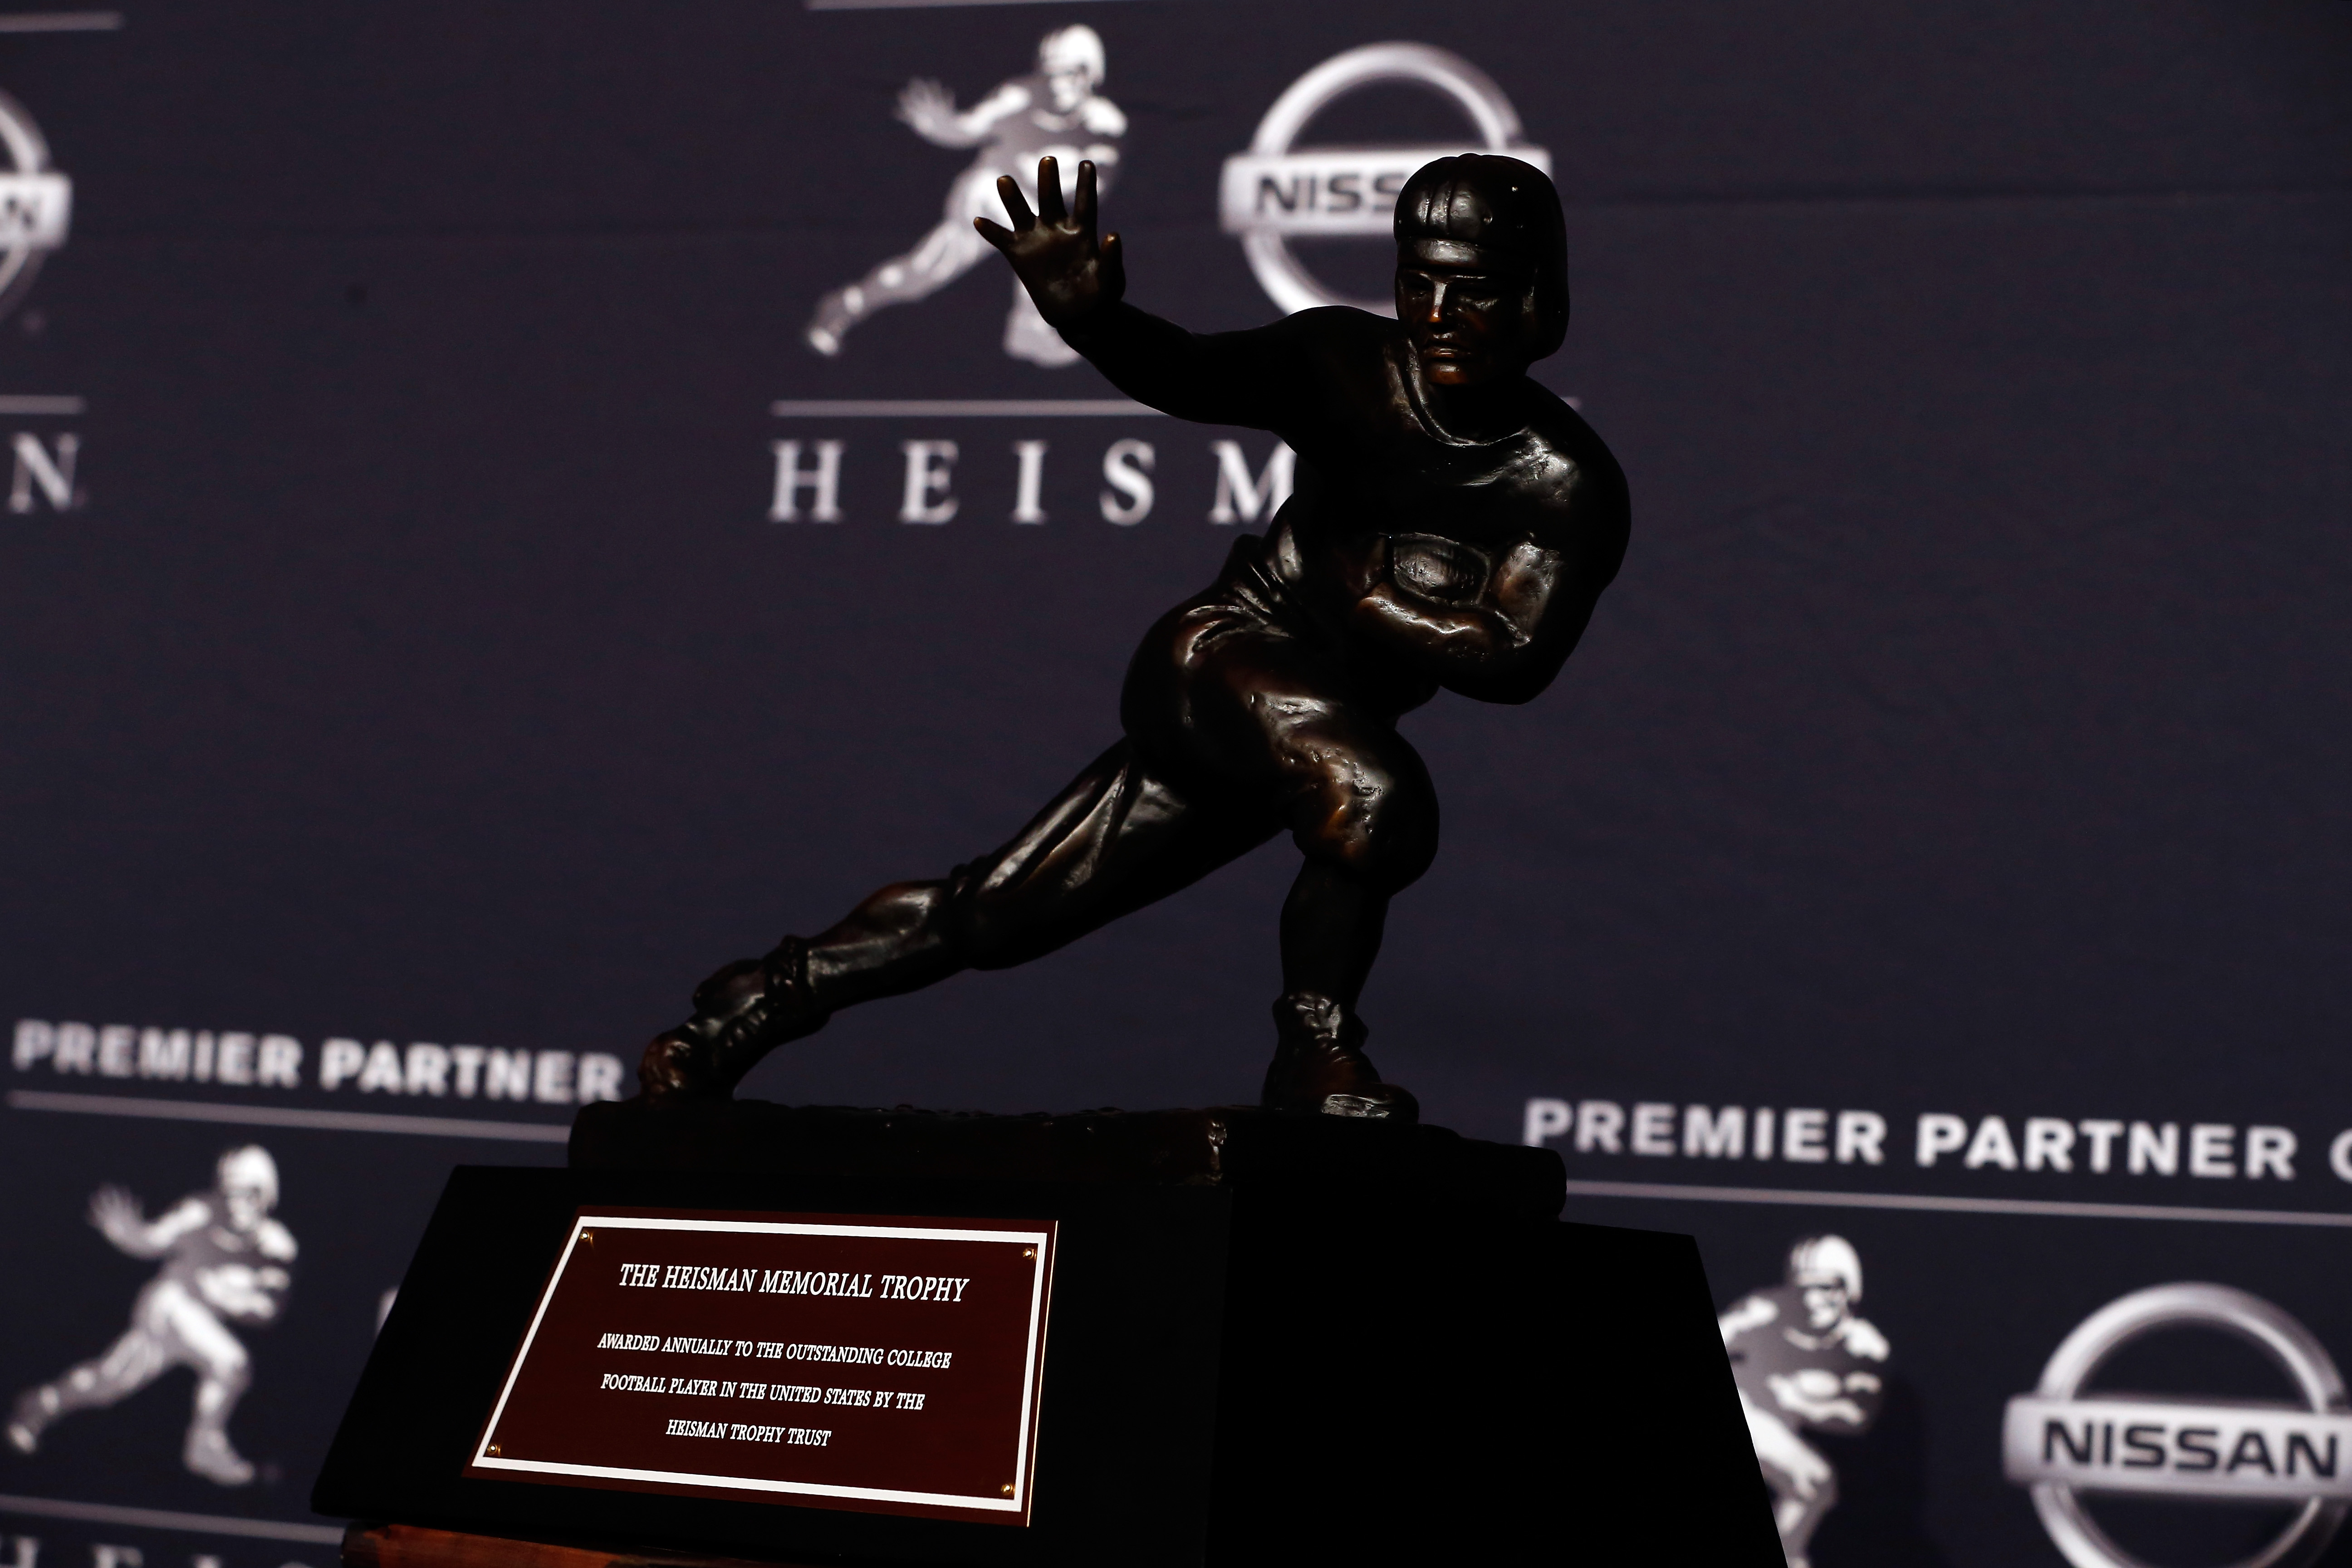 the heisman trophy presentation